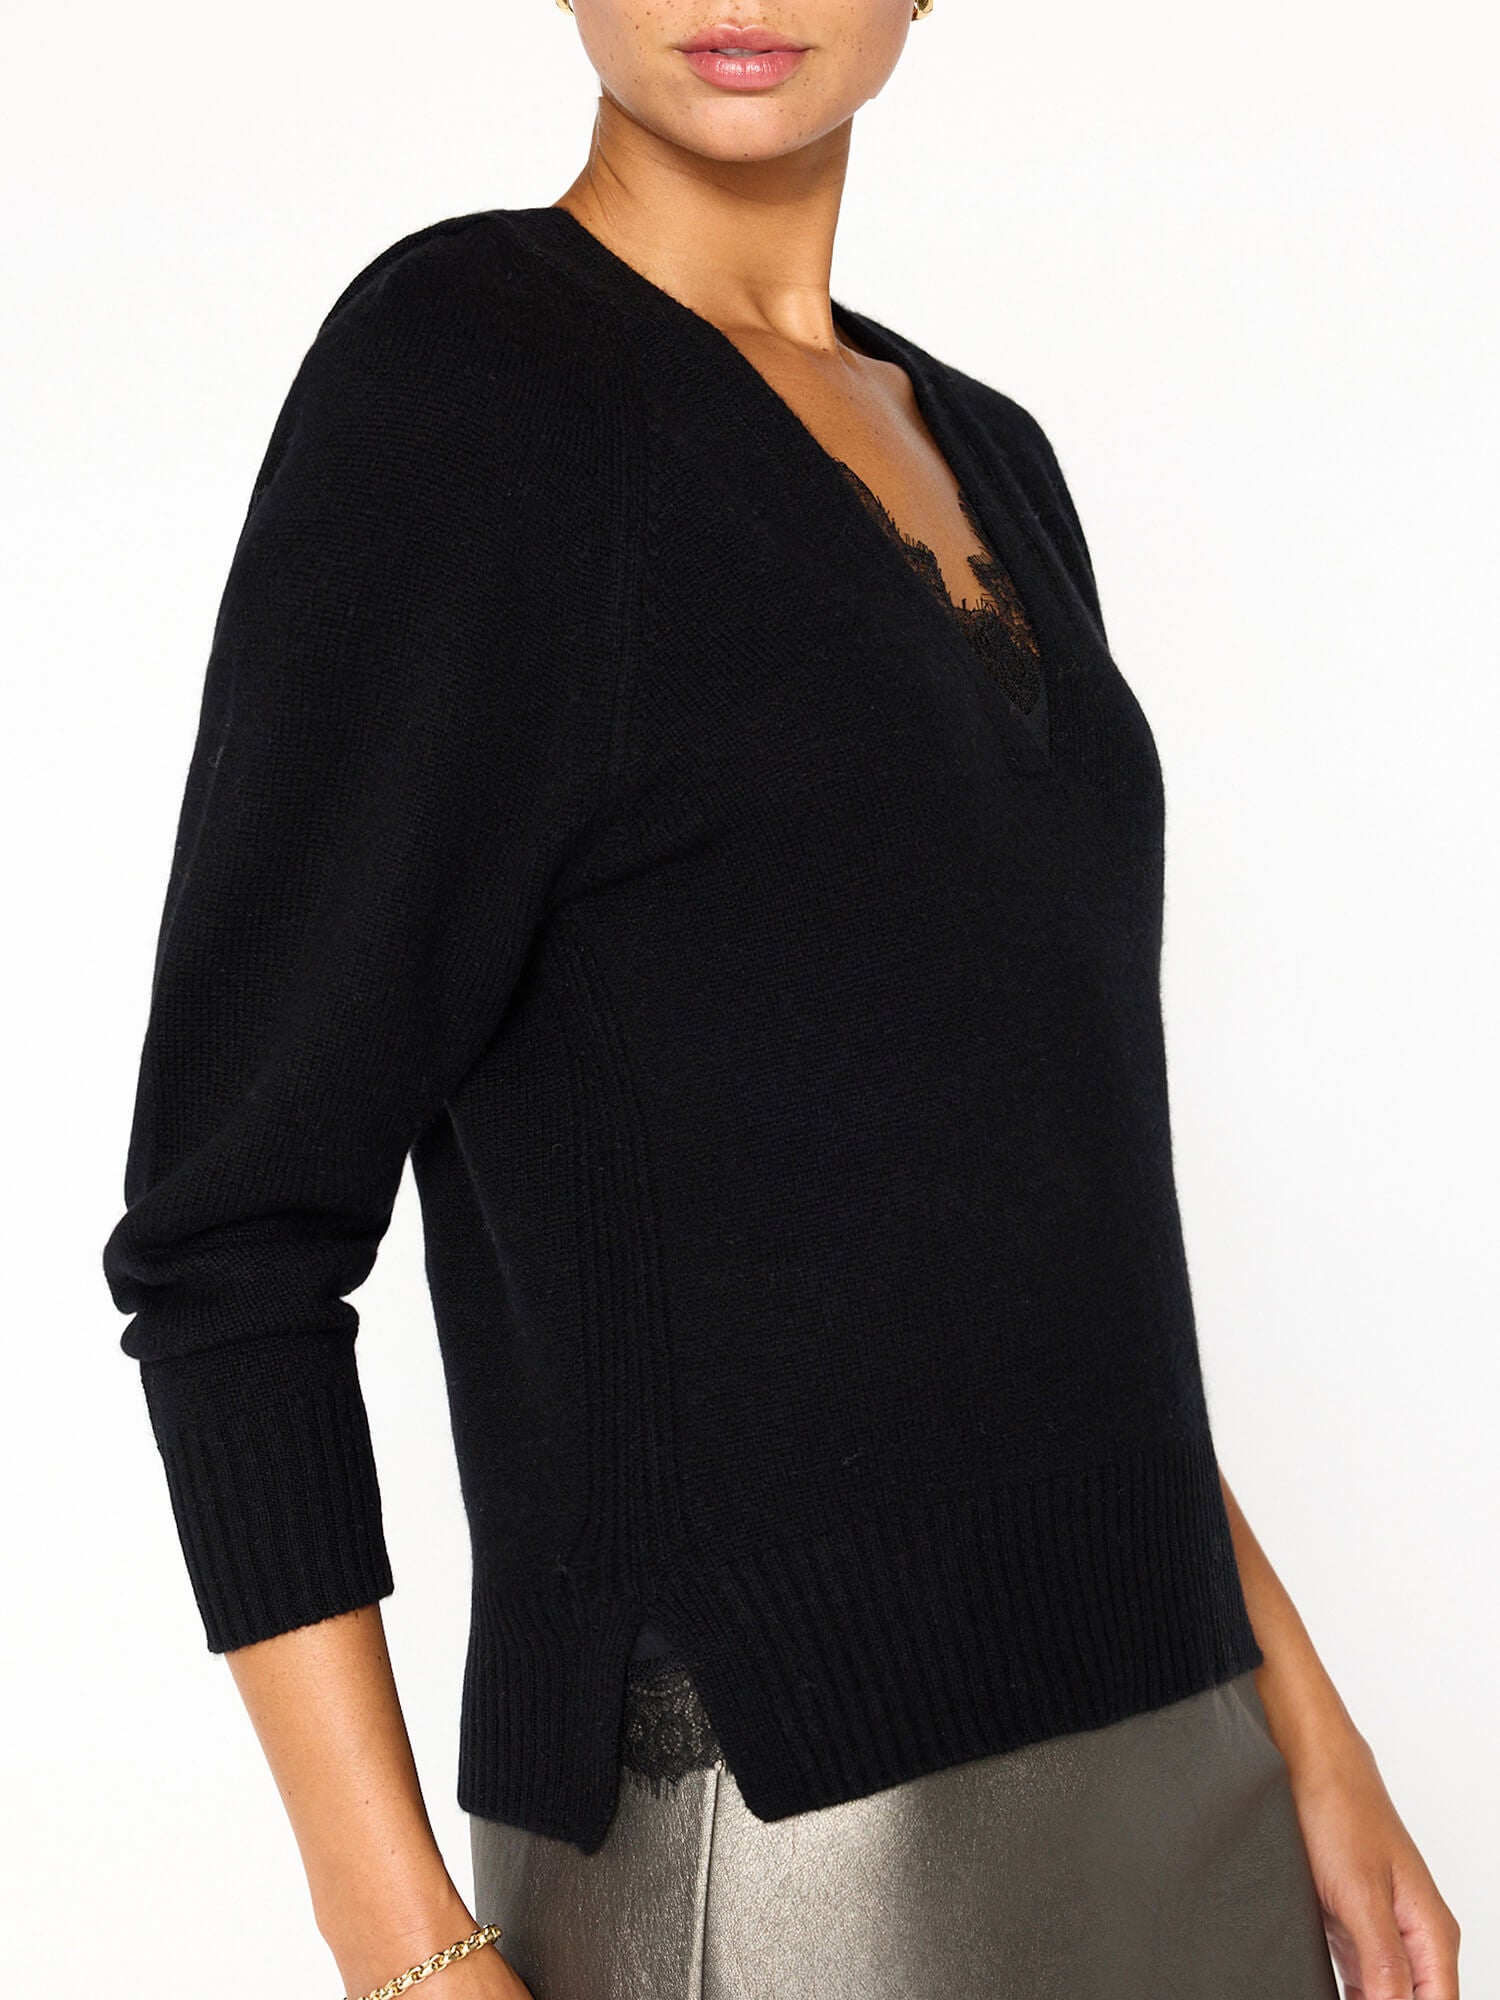 Ida black layered lace v-neck sweater side view